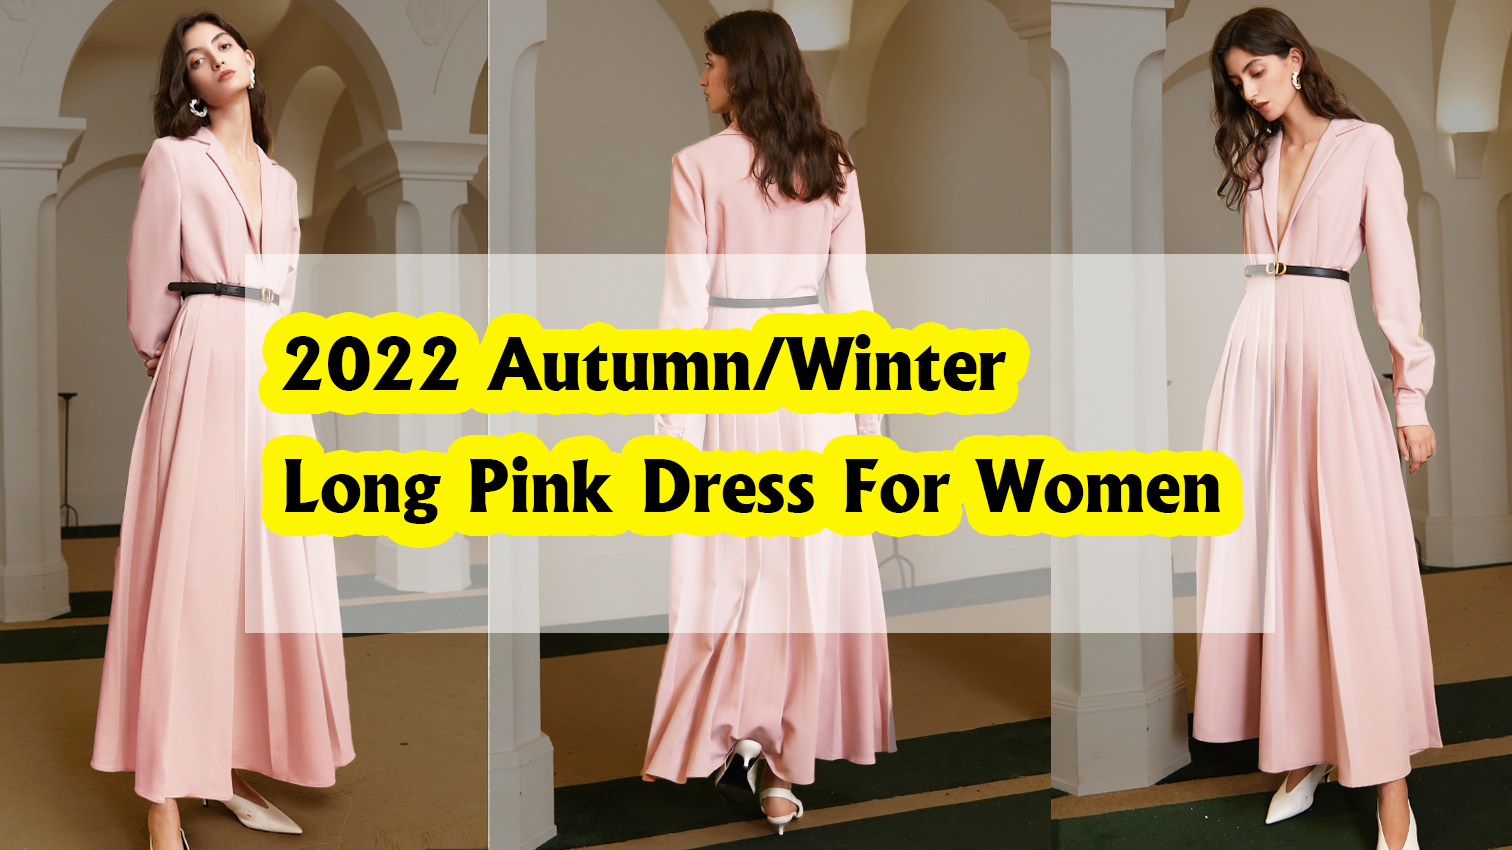 Prantsuse V-kaelusega retro pikk, elegantne naiste kleit, roosa